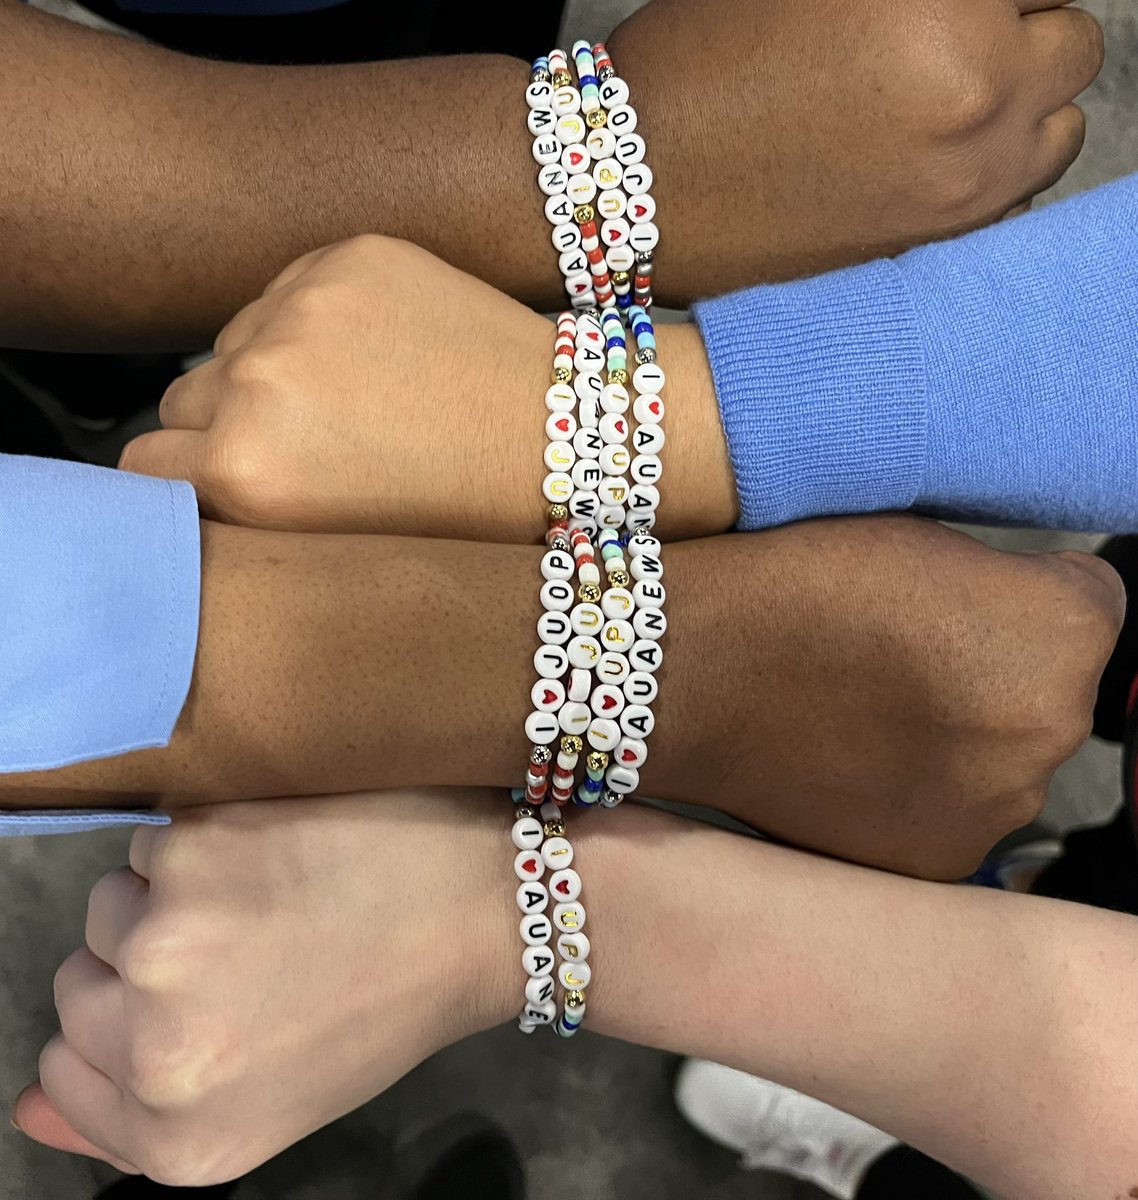 LOVELOVELOVELOVE this pic my dear @AmerUrological colleagues sent me of their #AUA24 friendship bracelet stacks 🩵💙❤️🤍🩶 @JUrology @UrologyPractice @JUOpenPlus #AUANews